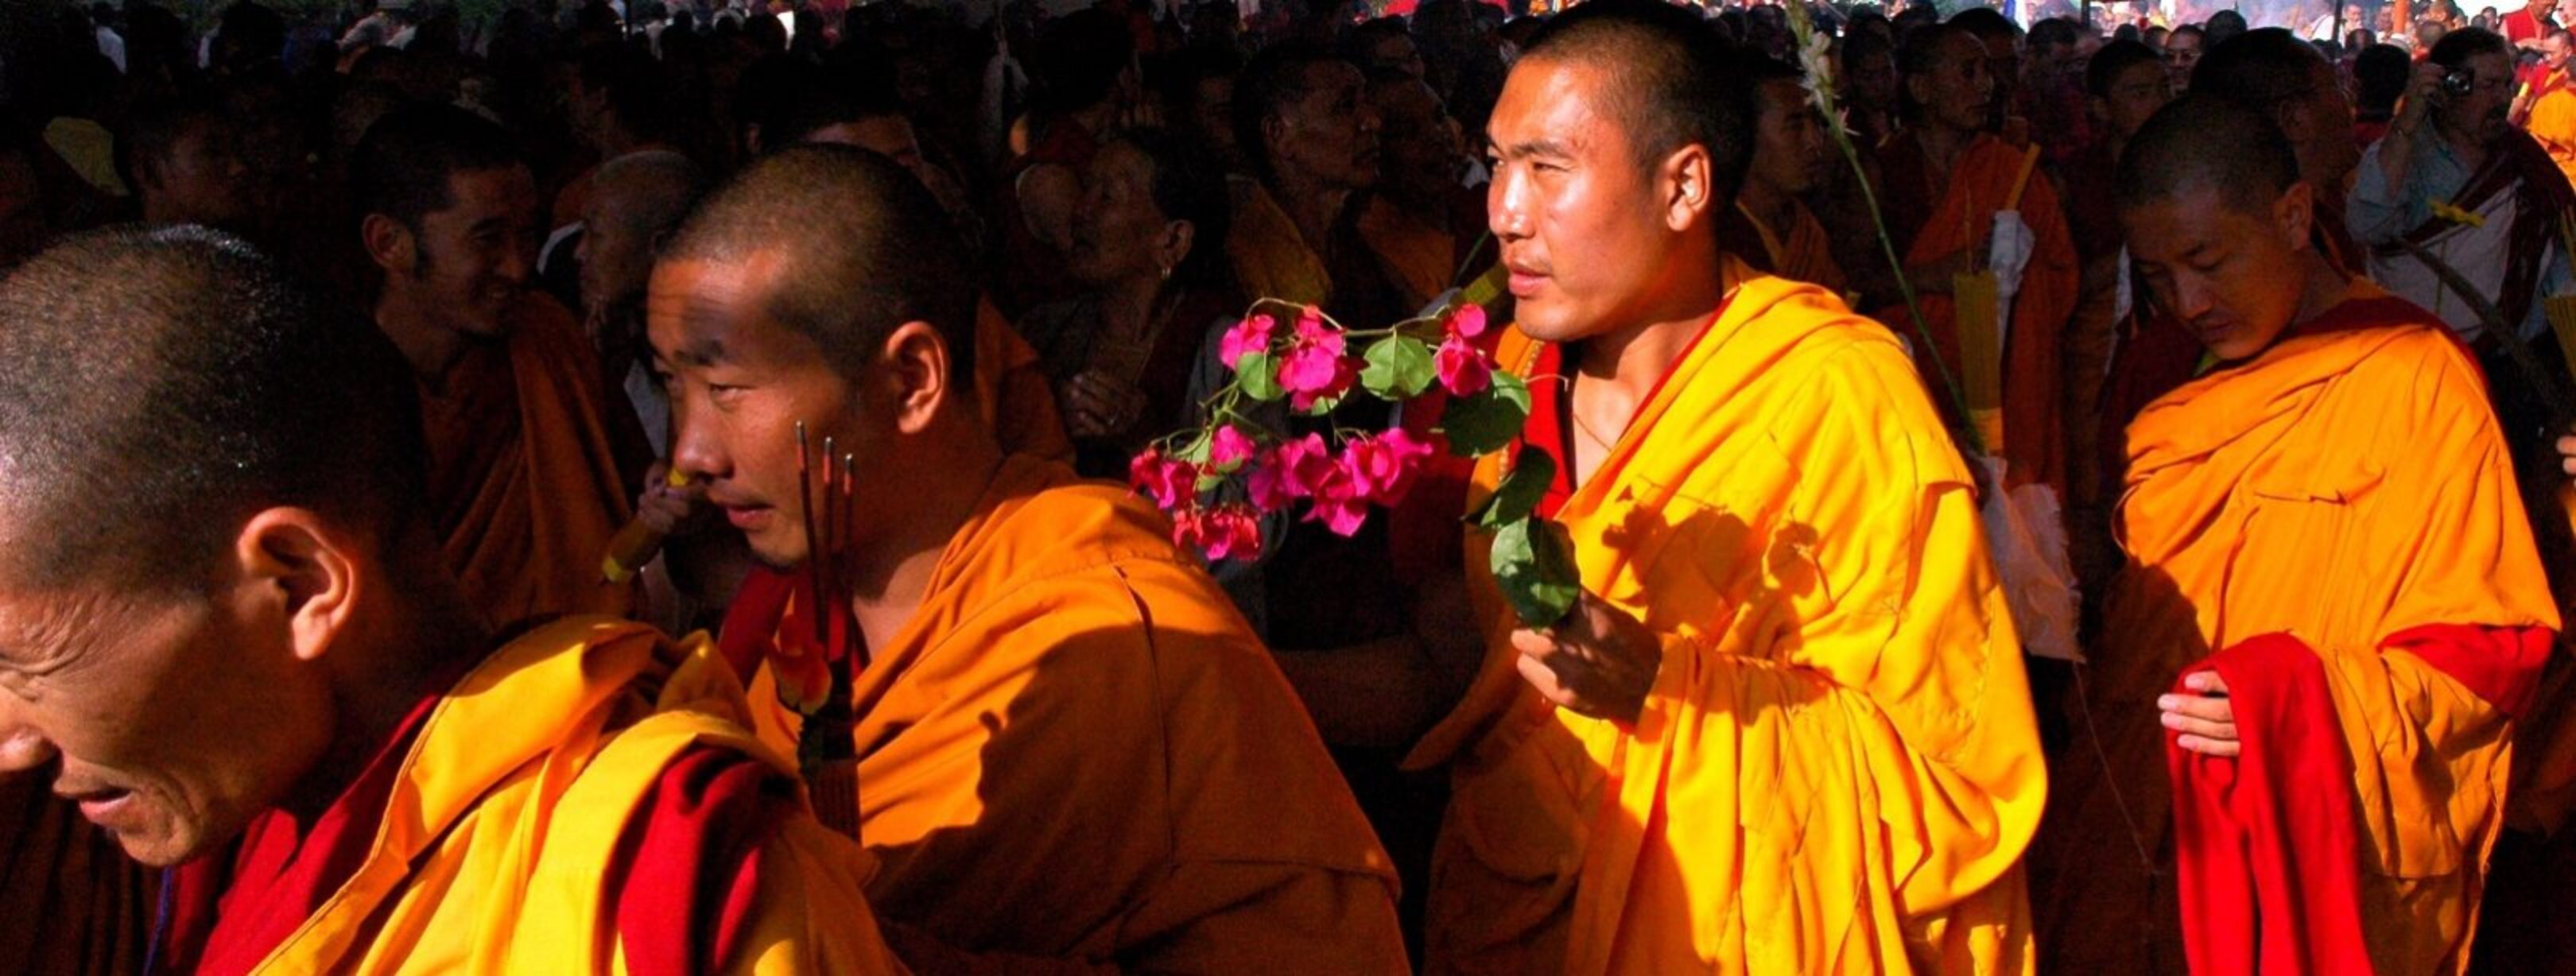 A Tibetan Buddhist procession in Kathmandu_by Wonderlane_Flickr